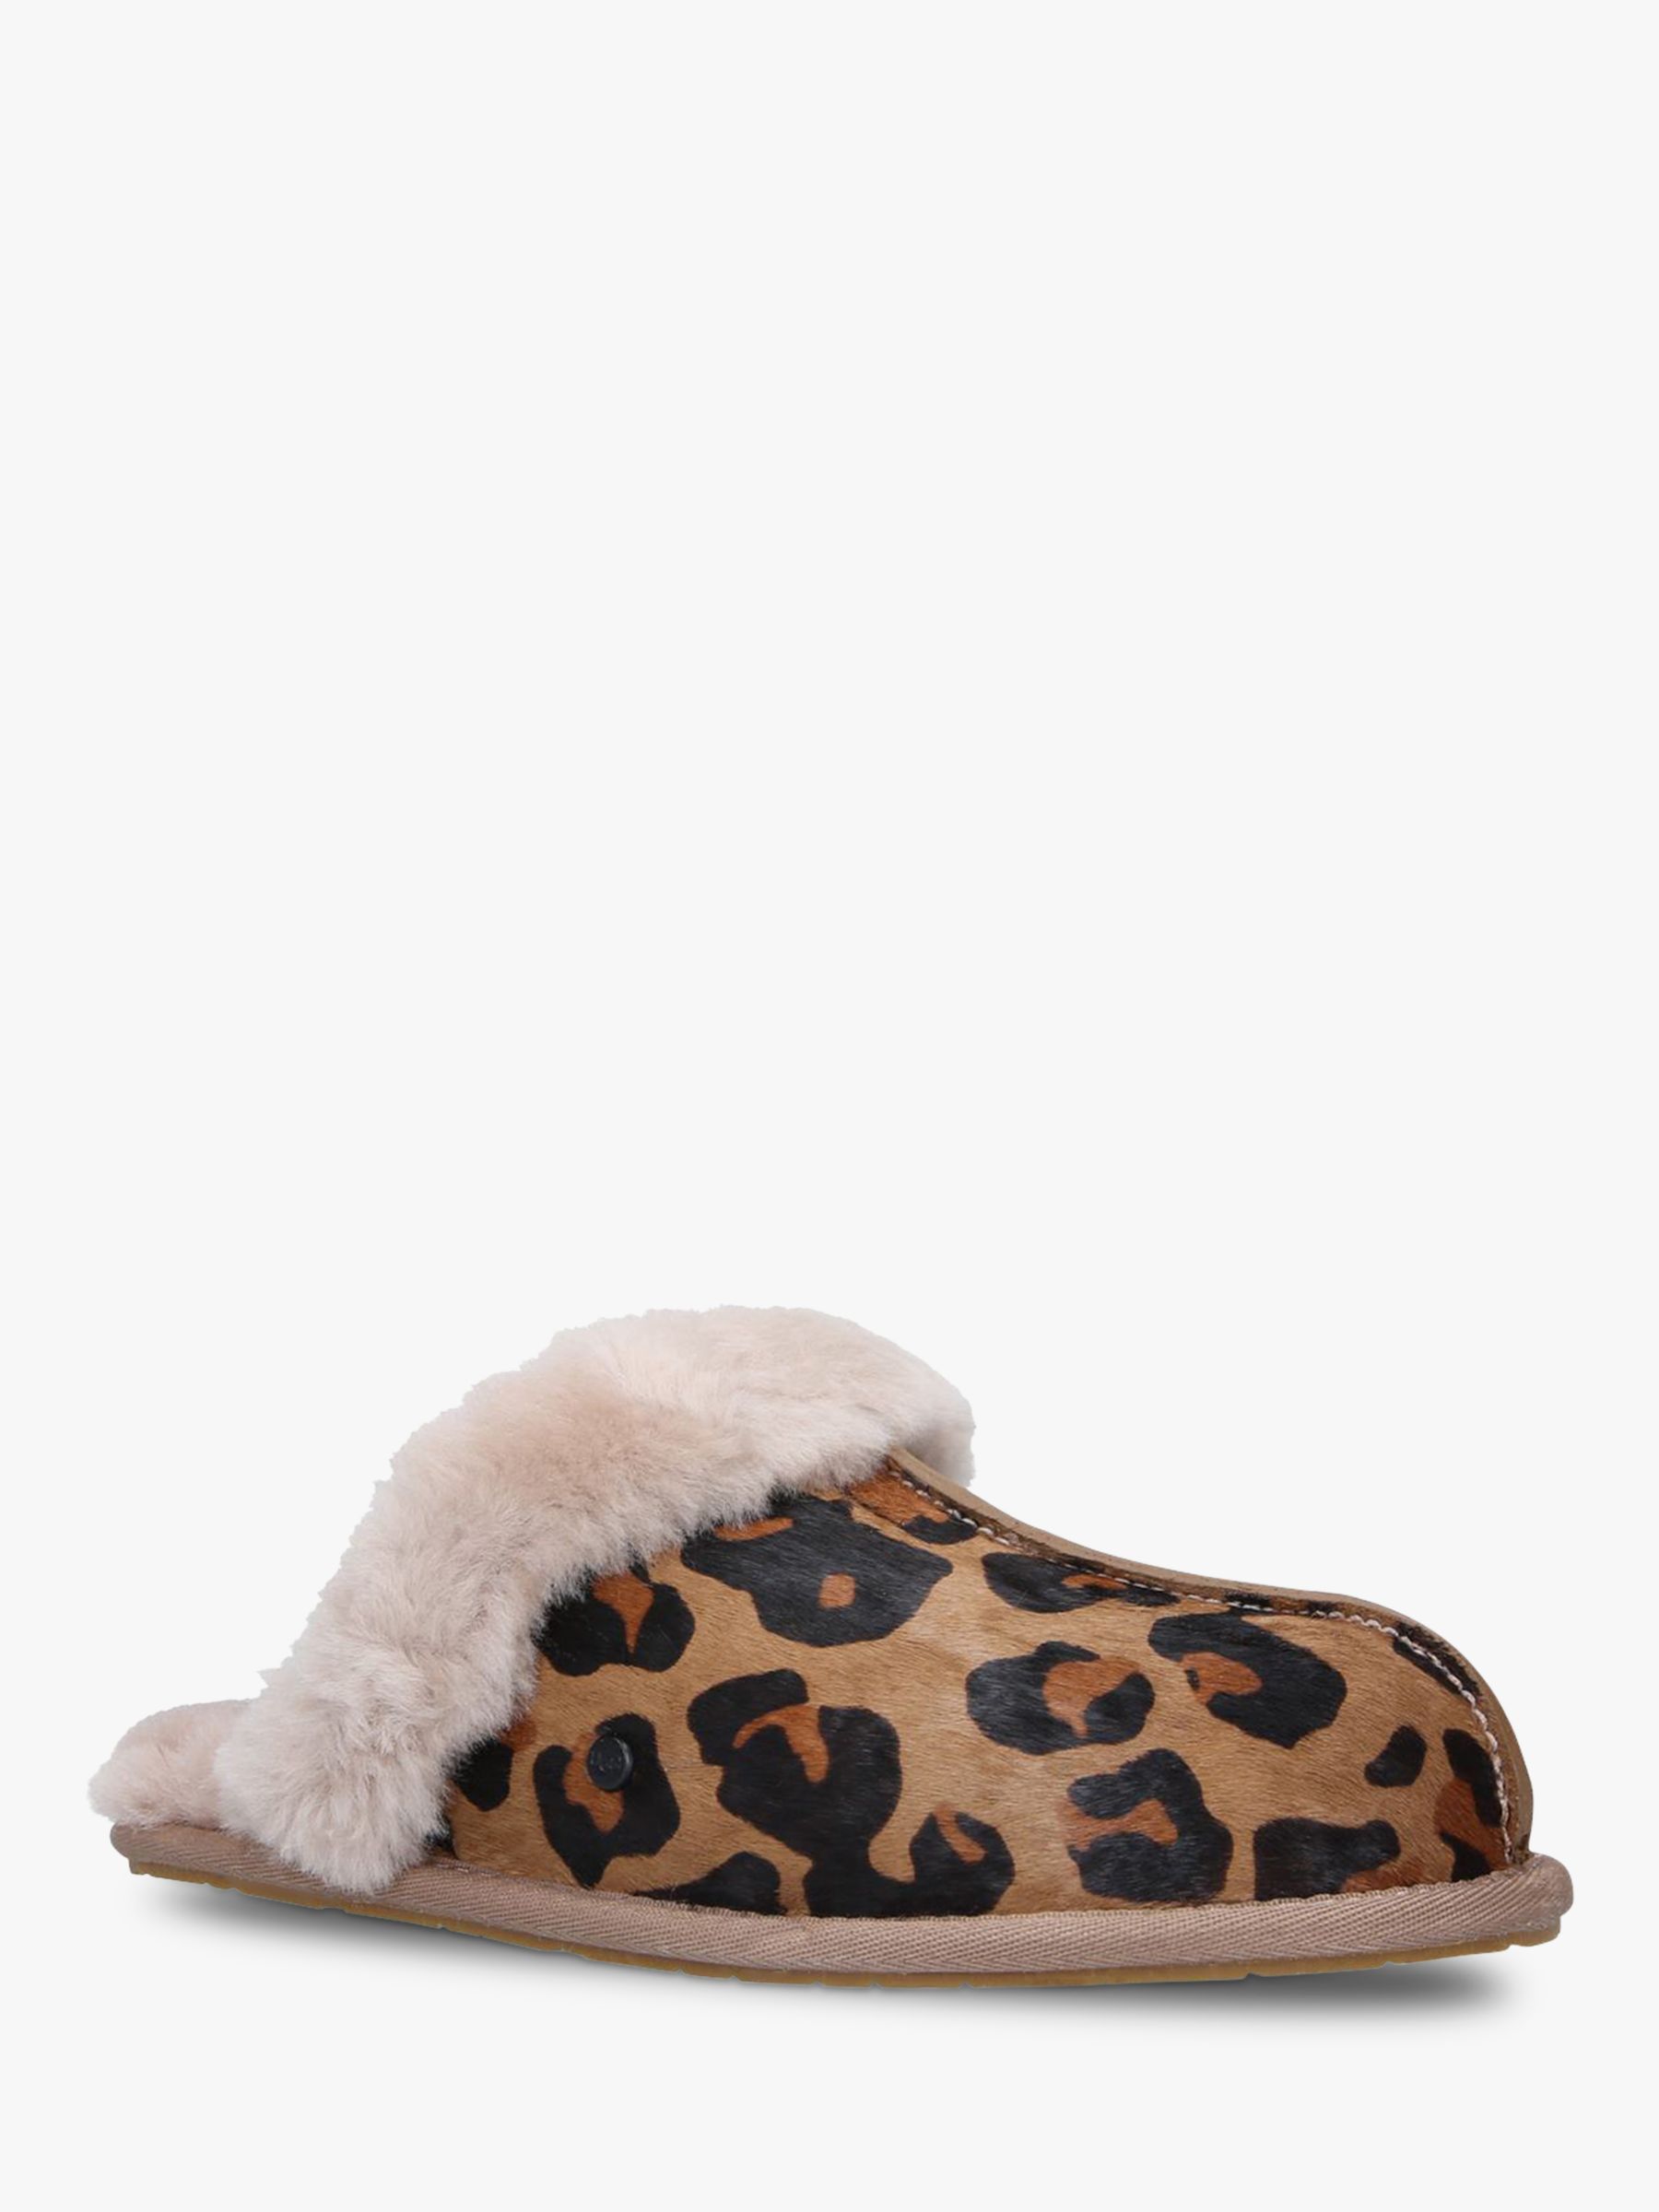 leopard print ugg slippers uk